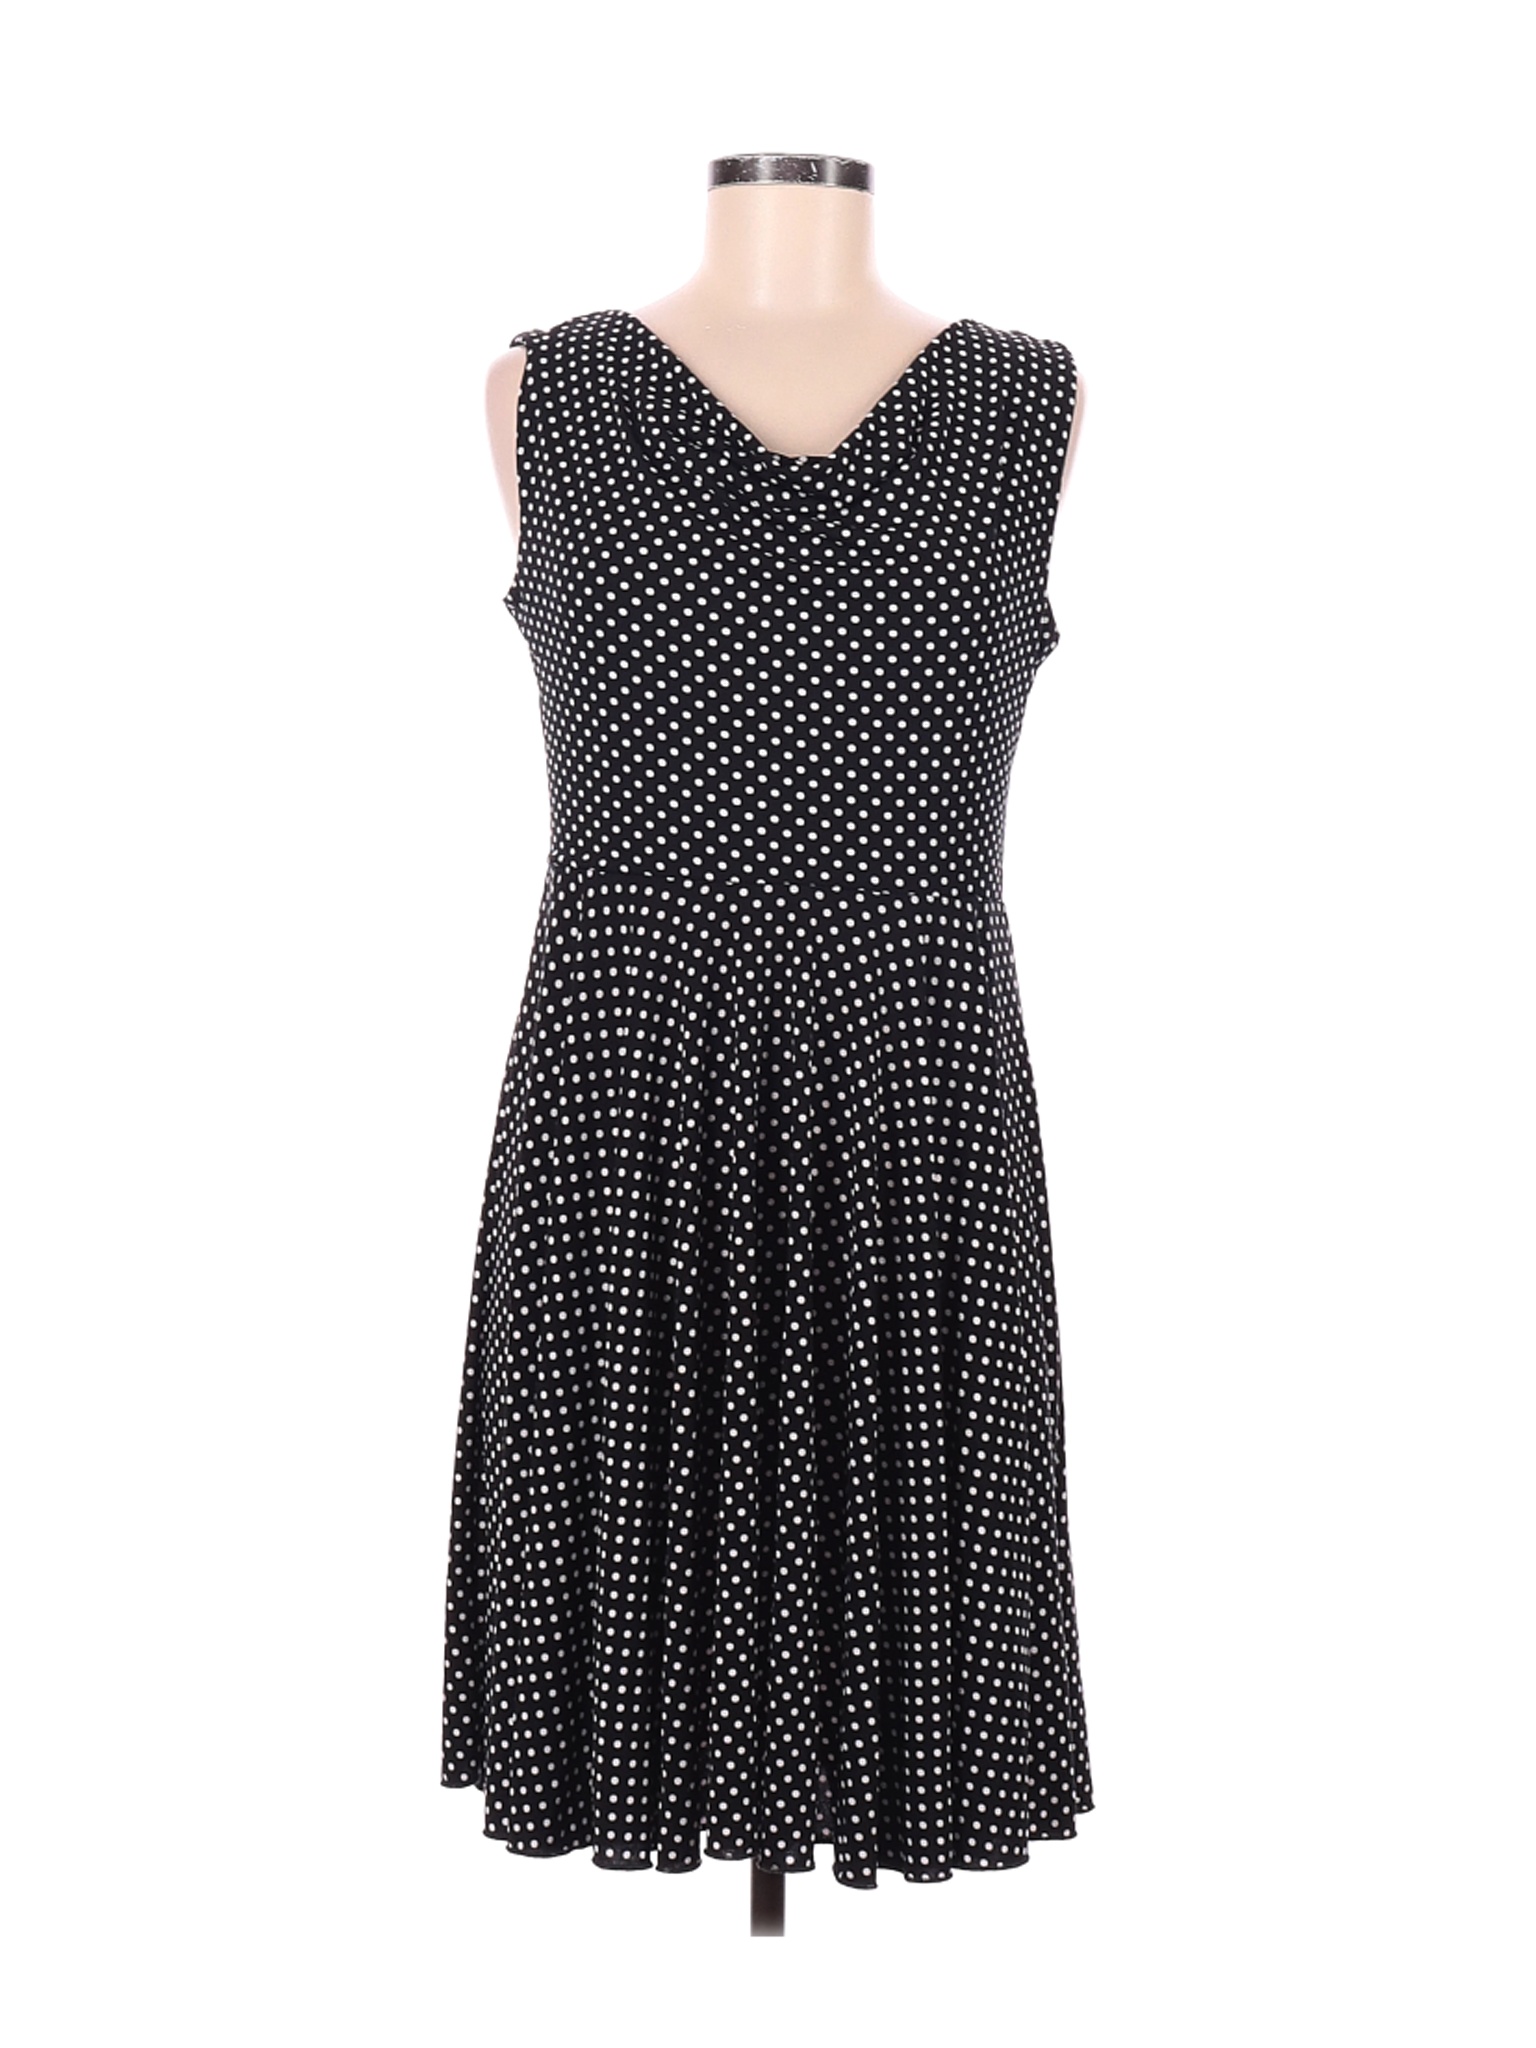 Valerie Bertinelli Women Black Casual Dress 8 | eBay